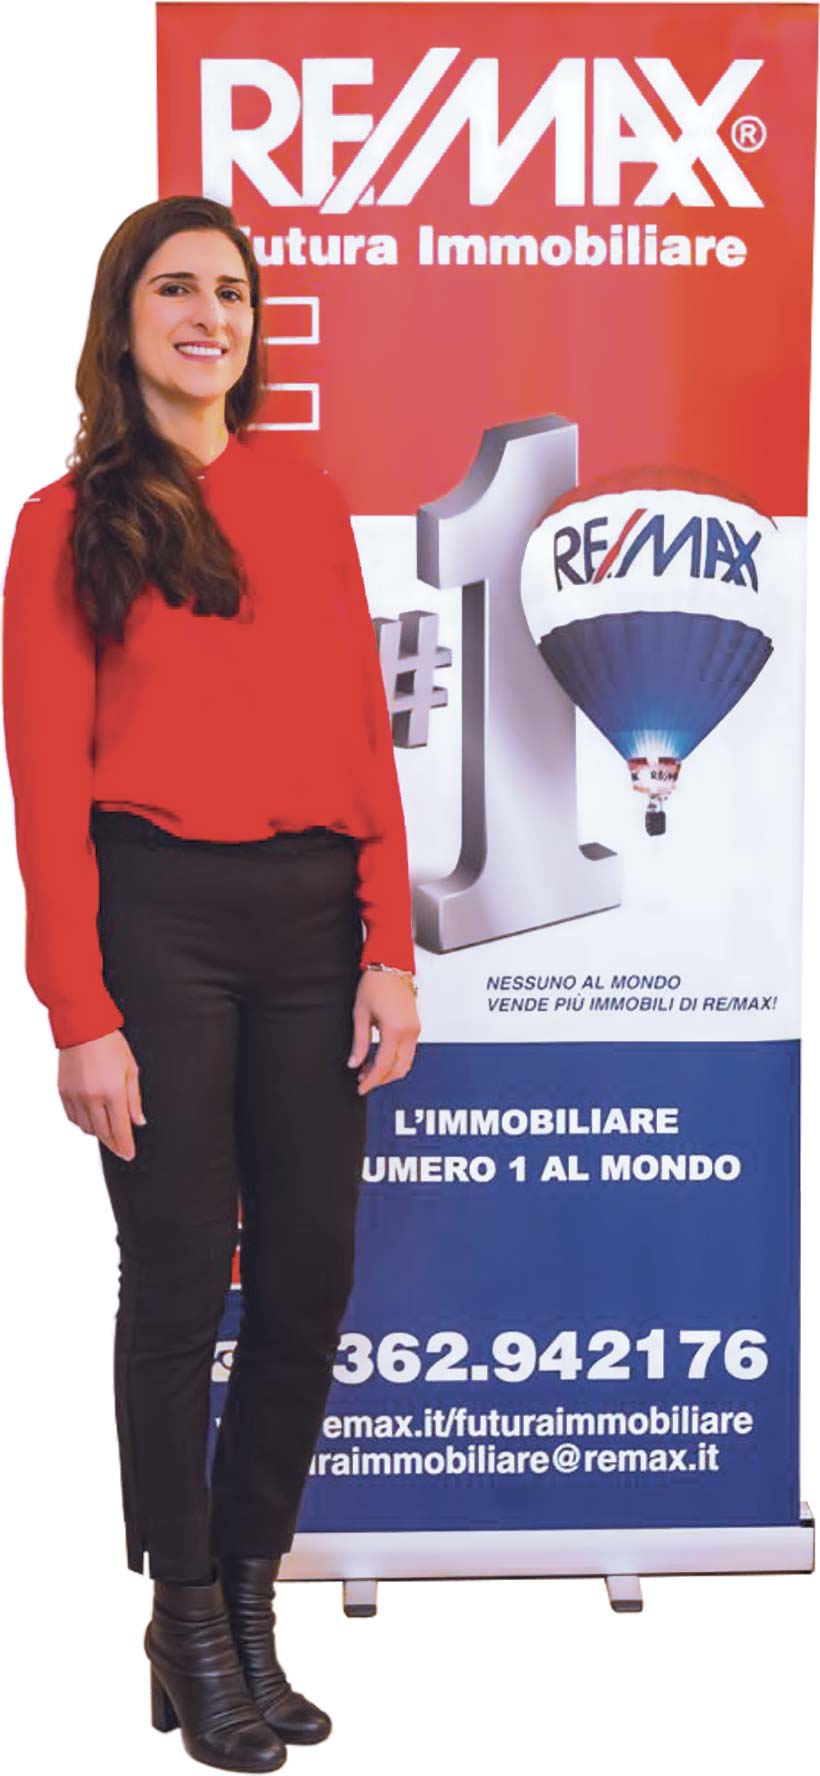 Remax Paola Fernandez